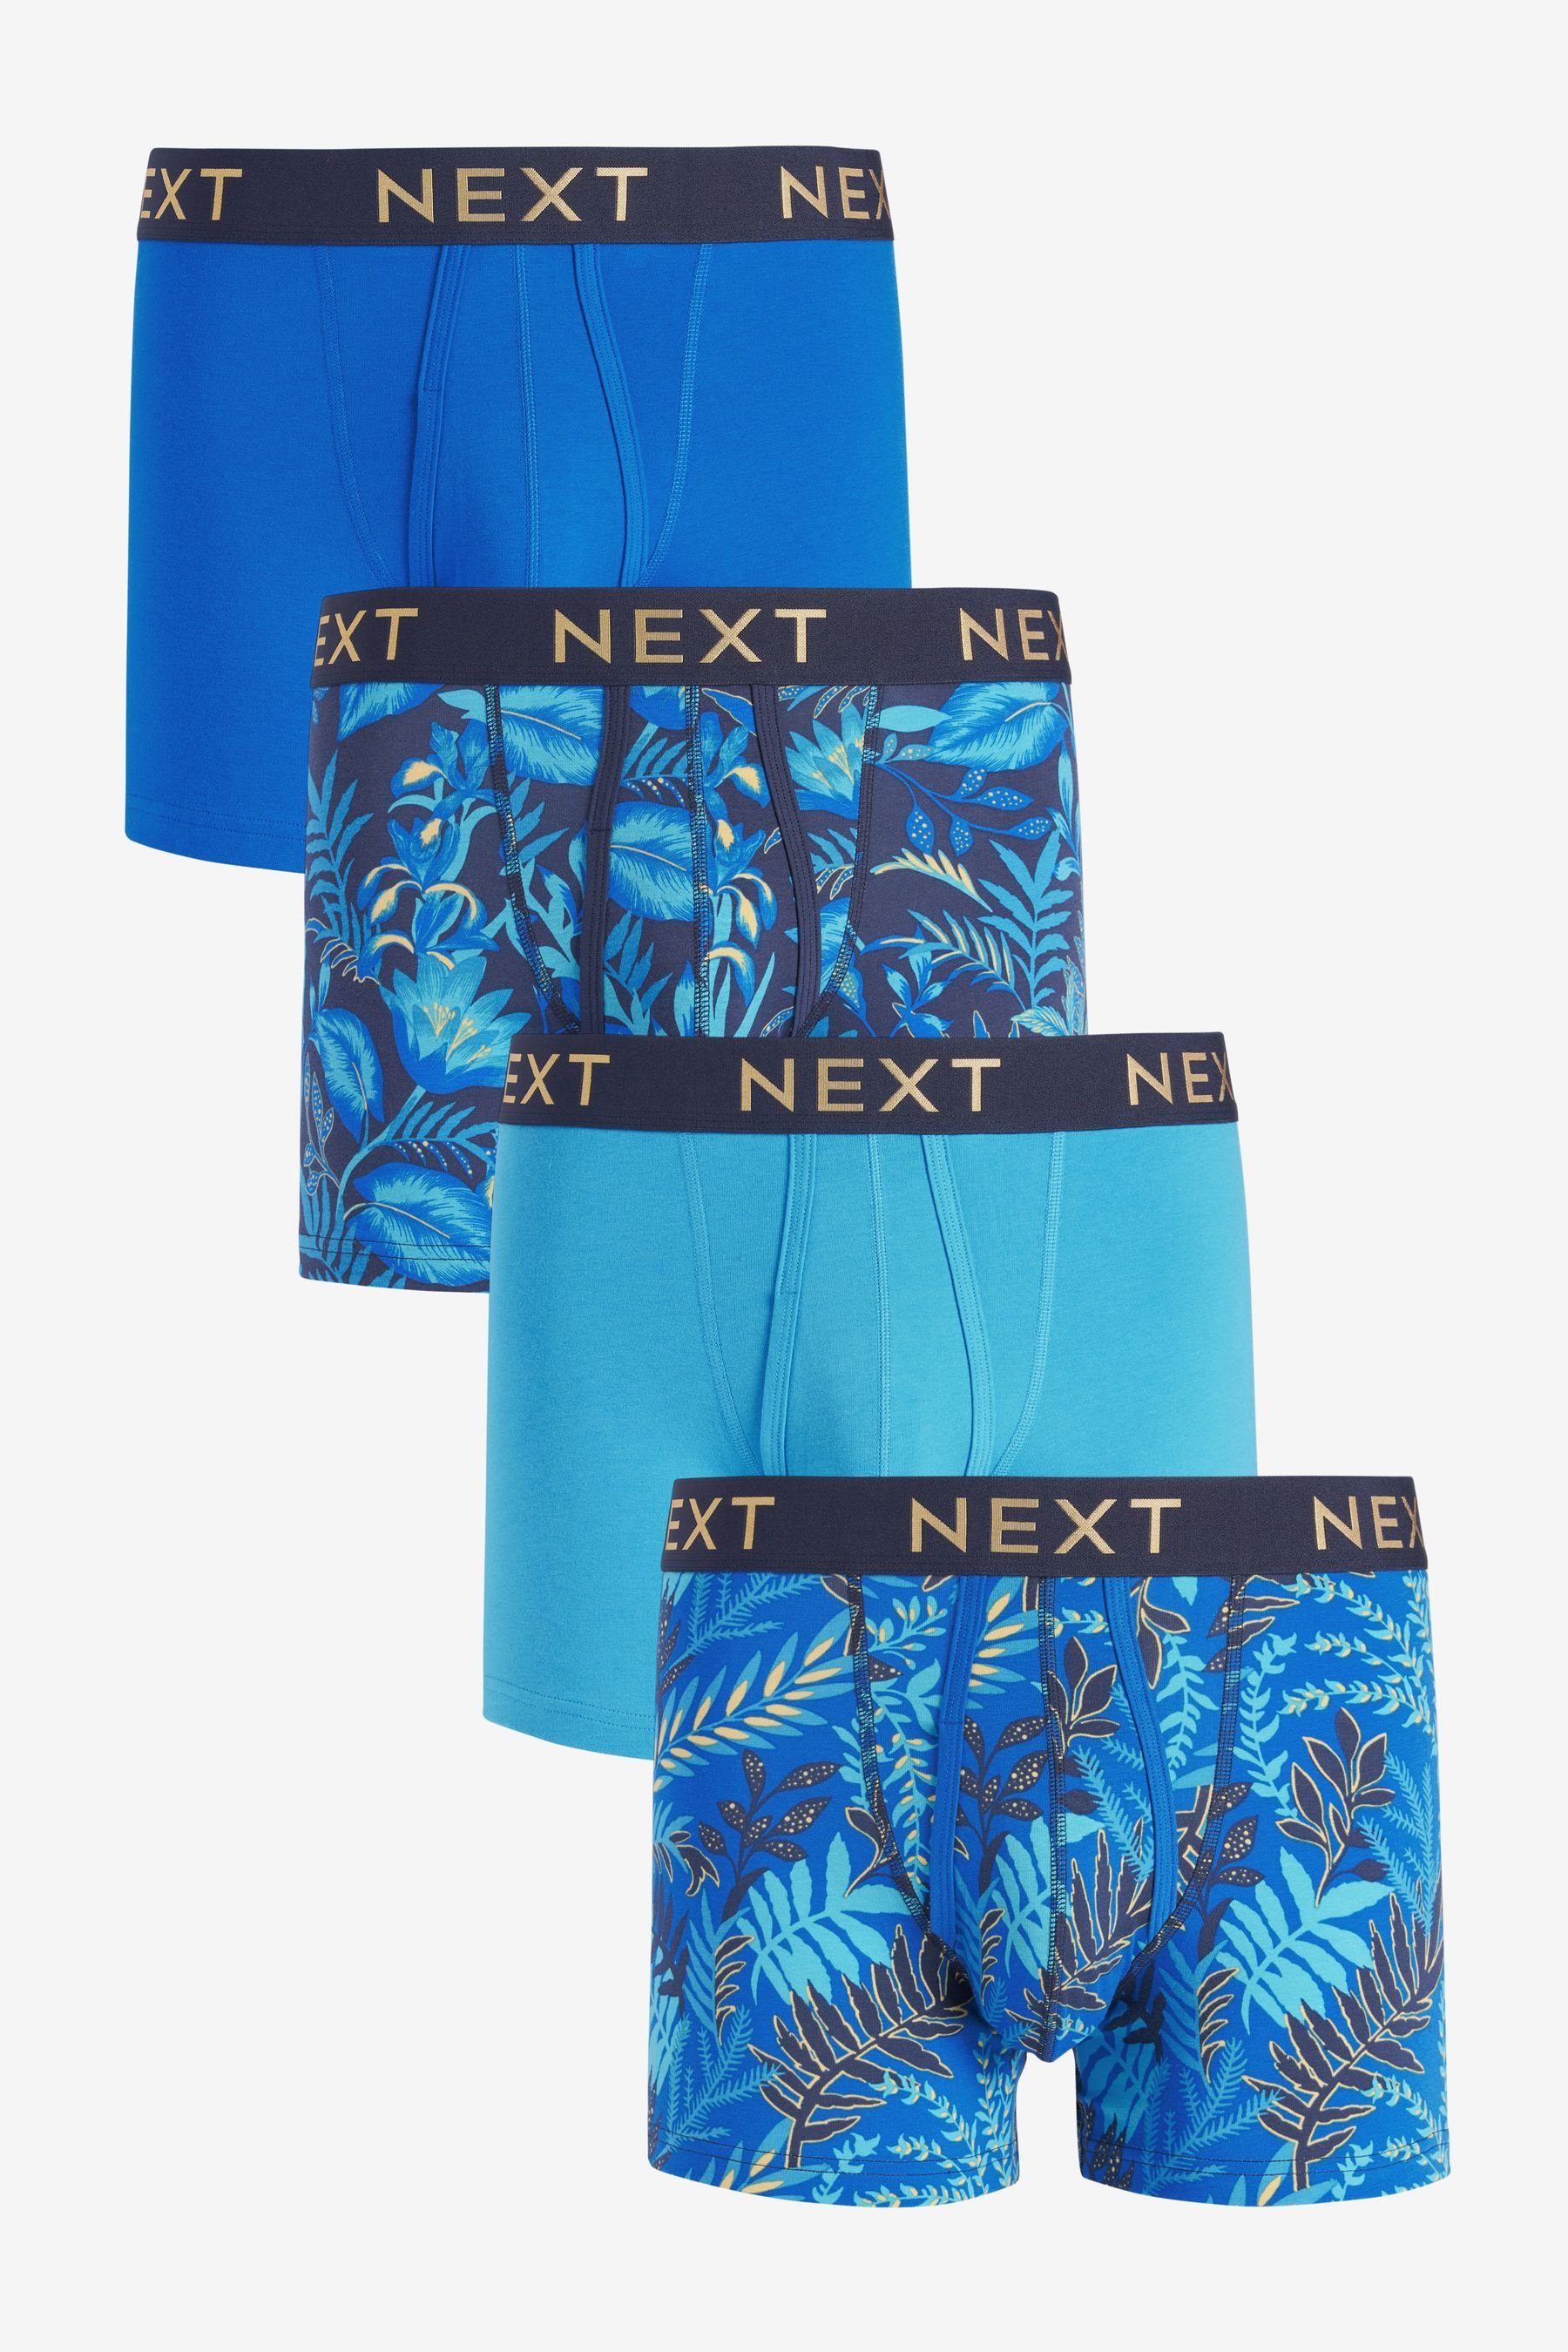 Next Boxershorts Gemusterte Boxershorts, 4er-Pack (4-St) Blue Leaf Print